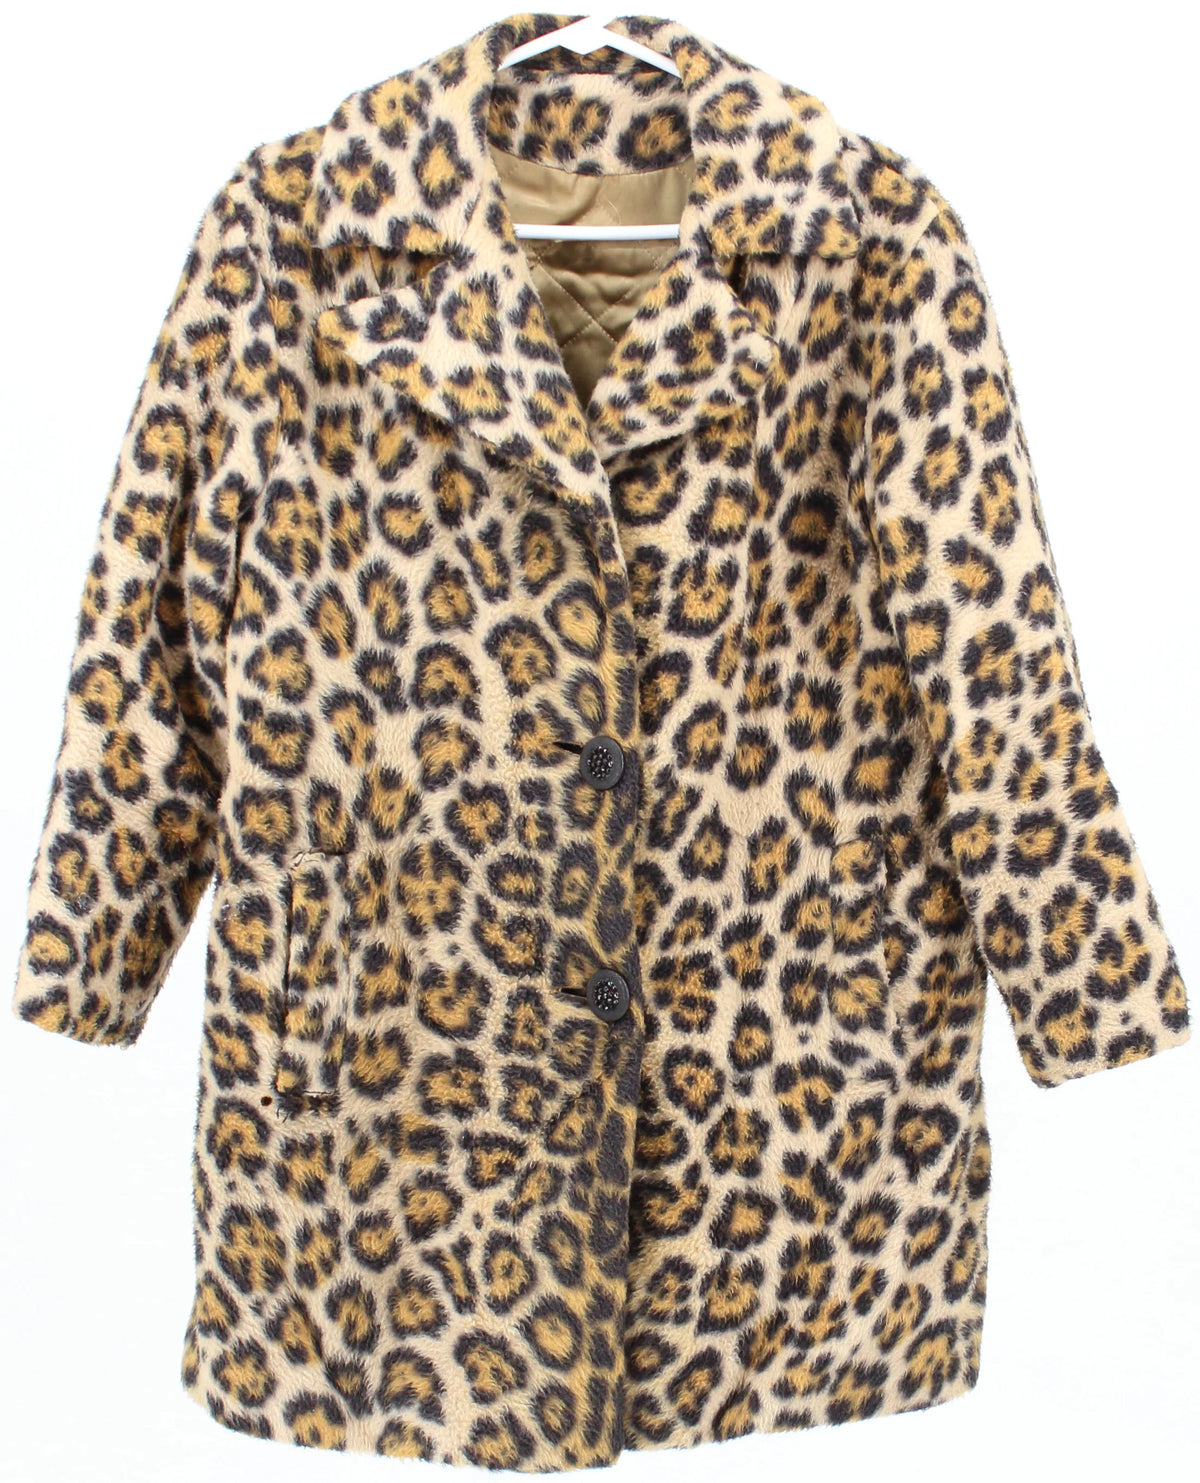 PackerLand Green Bay Outerwear Co. Cheetah Print Coat